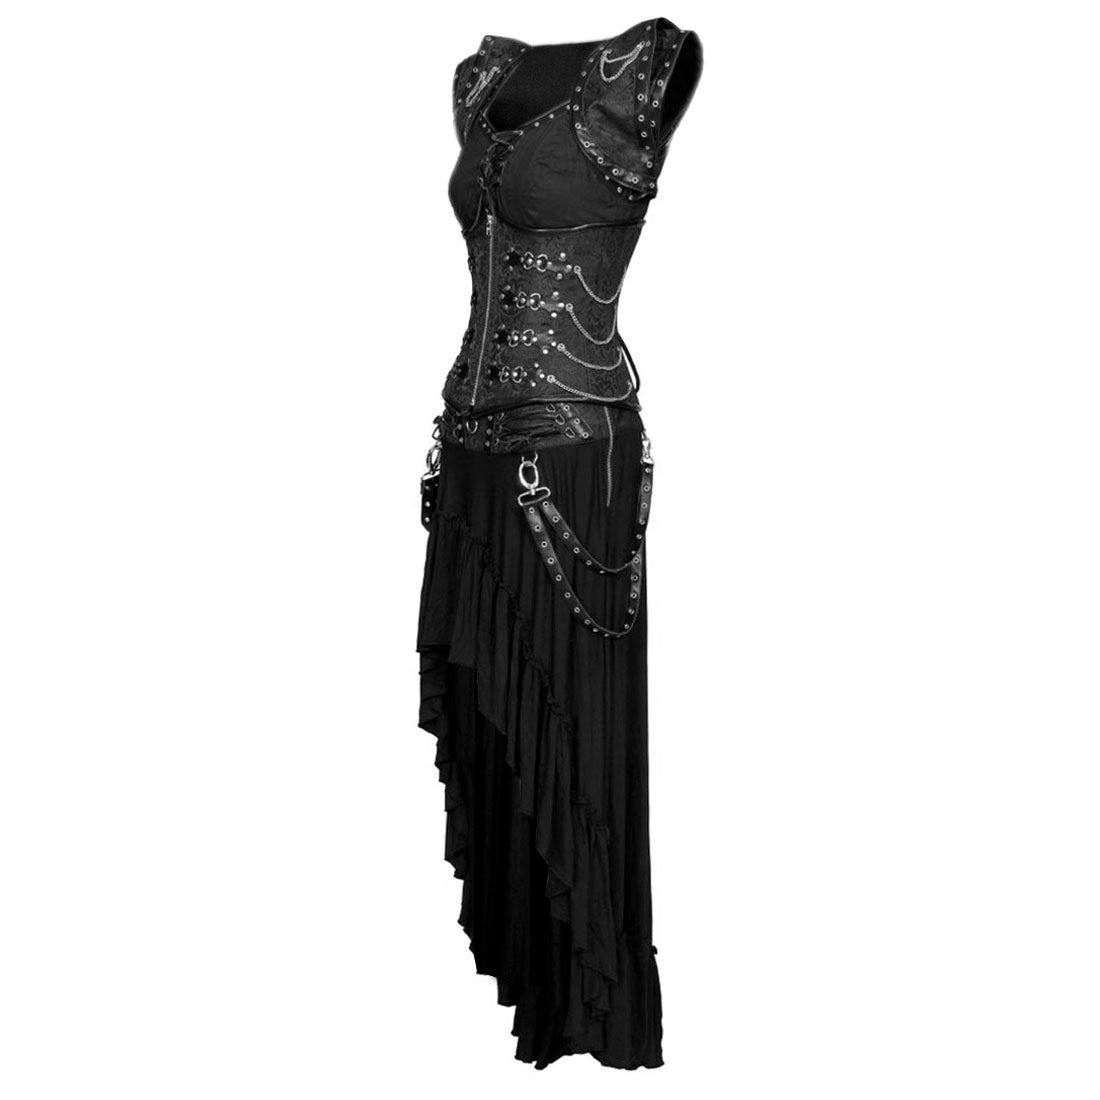 Aphrodite Gothic Authentic Steel Boned Overbust Corset Dress